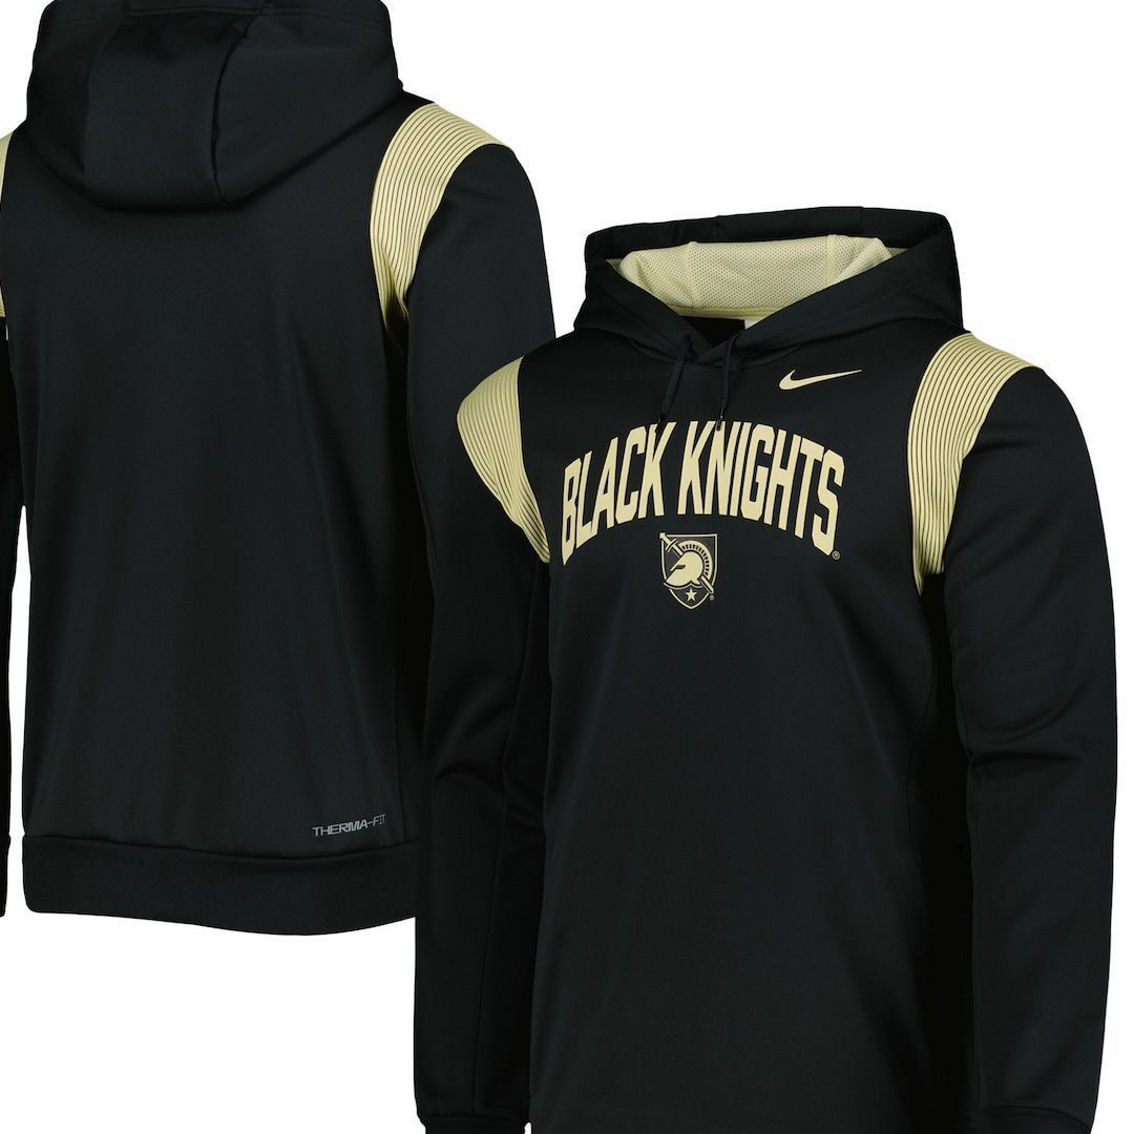 Nike Men's Black Army Black Knights 2022 Sideline Performance Pullover Hoodie - Image 2 of 4